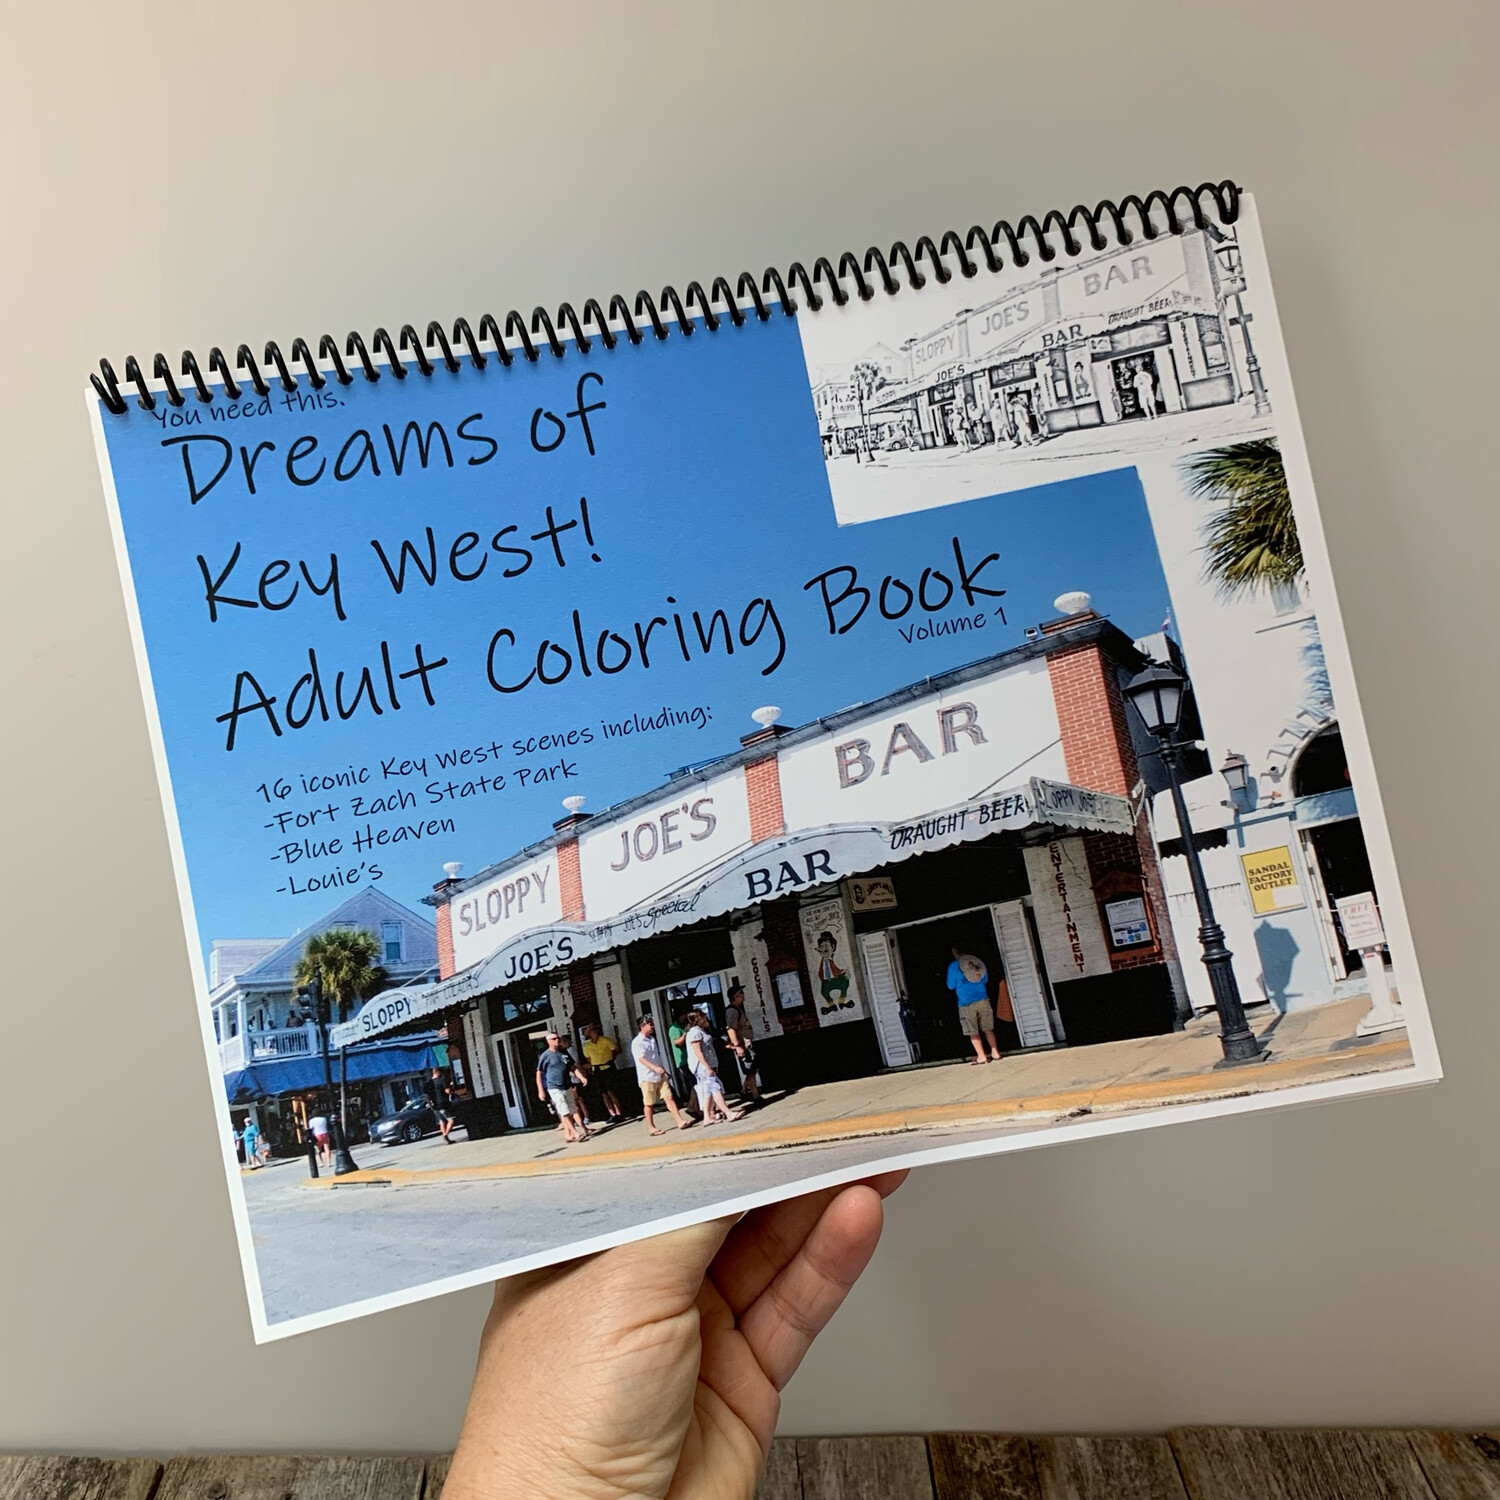 Key West Adult Coloring Book - Dreams of Key West! Volume 1